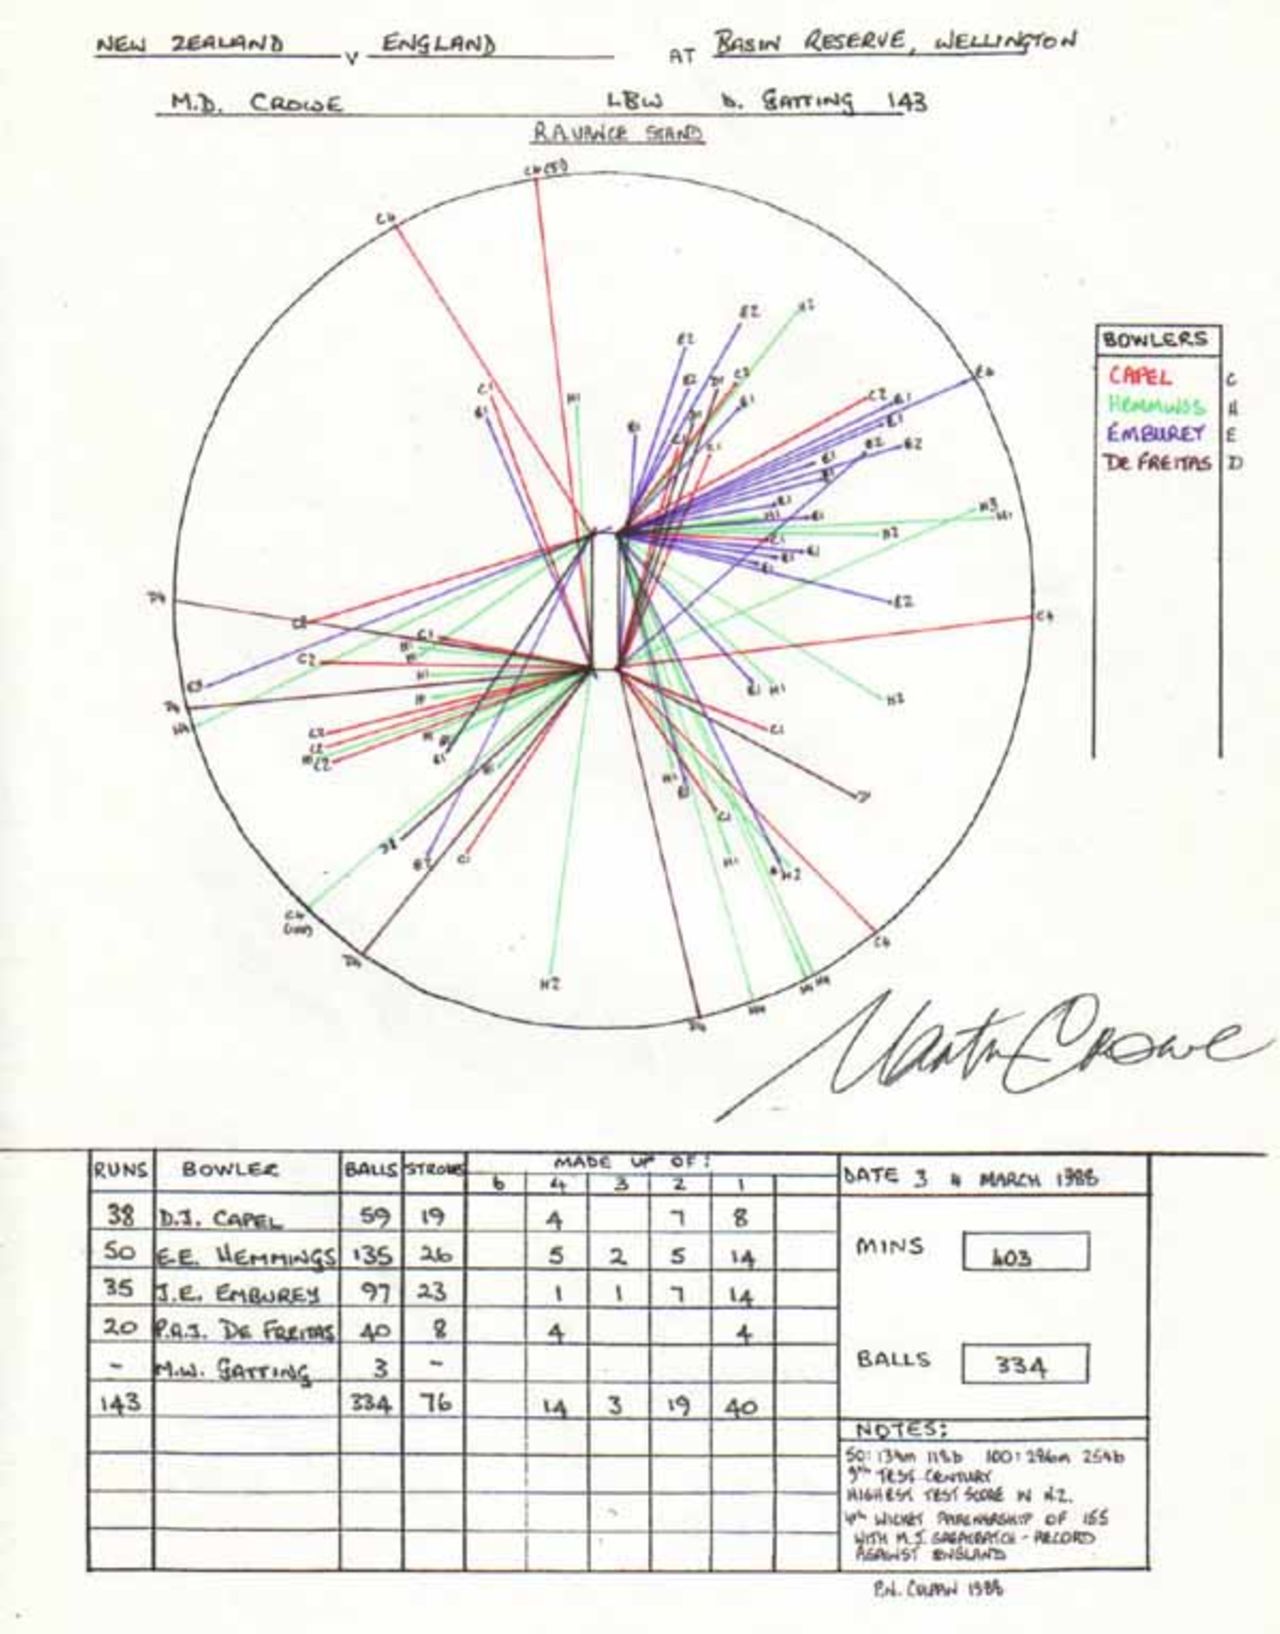 Wagon Wheel of Martin Crowe's 143 v England, Basin Reserve, Wellington 3-4 March 1988